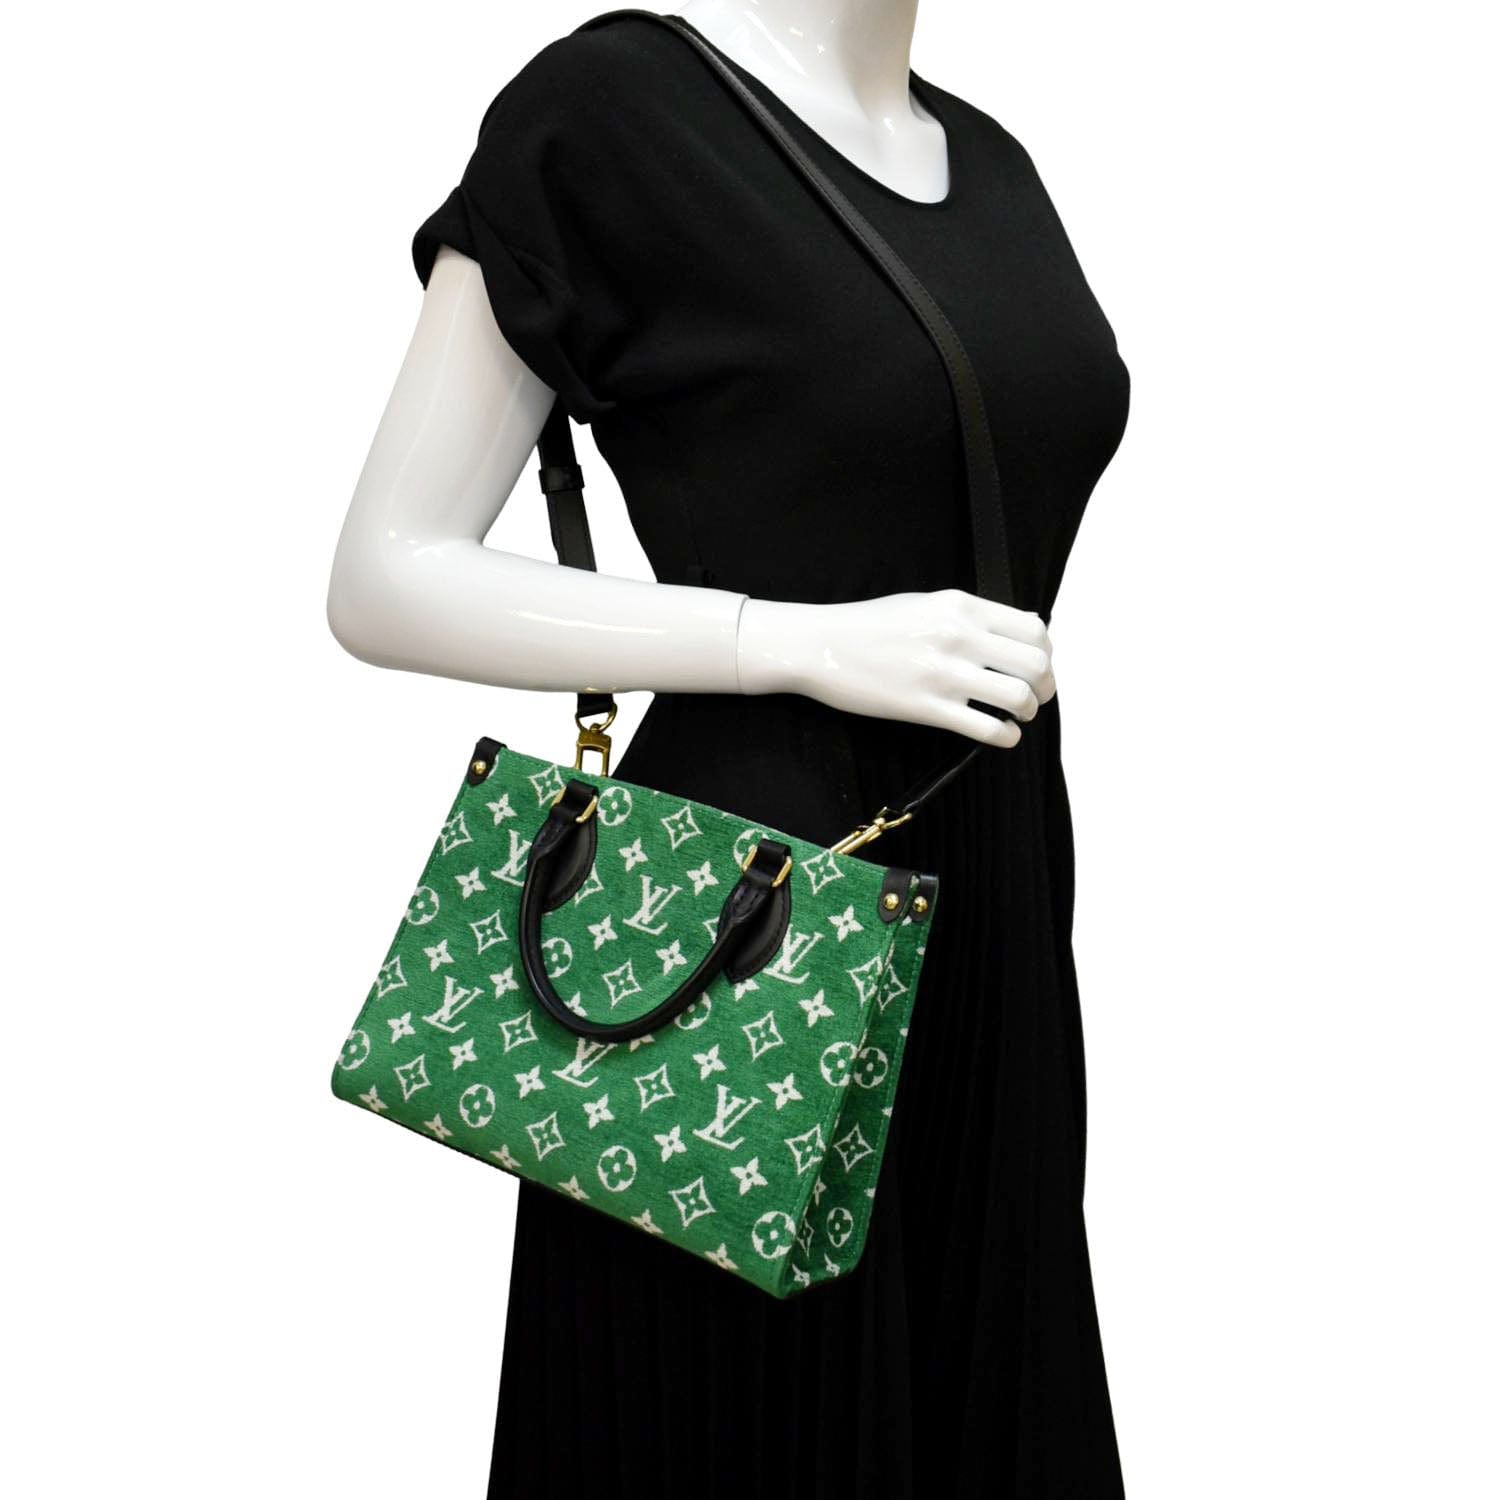 OnTheGo PM Monogram Canvas - Women - Handbags